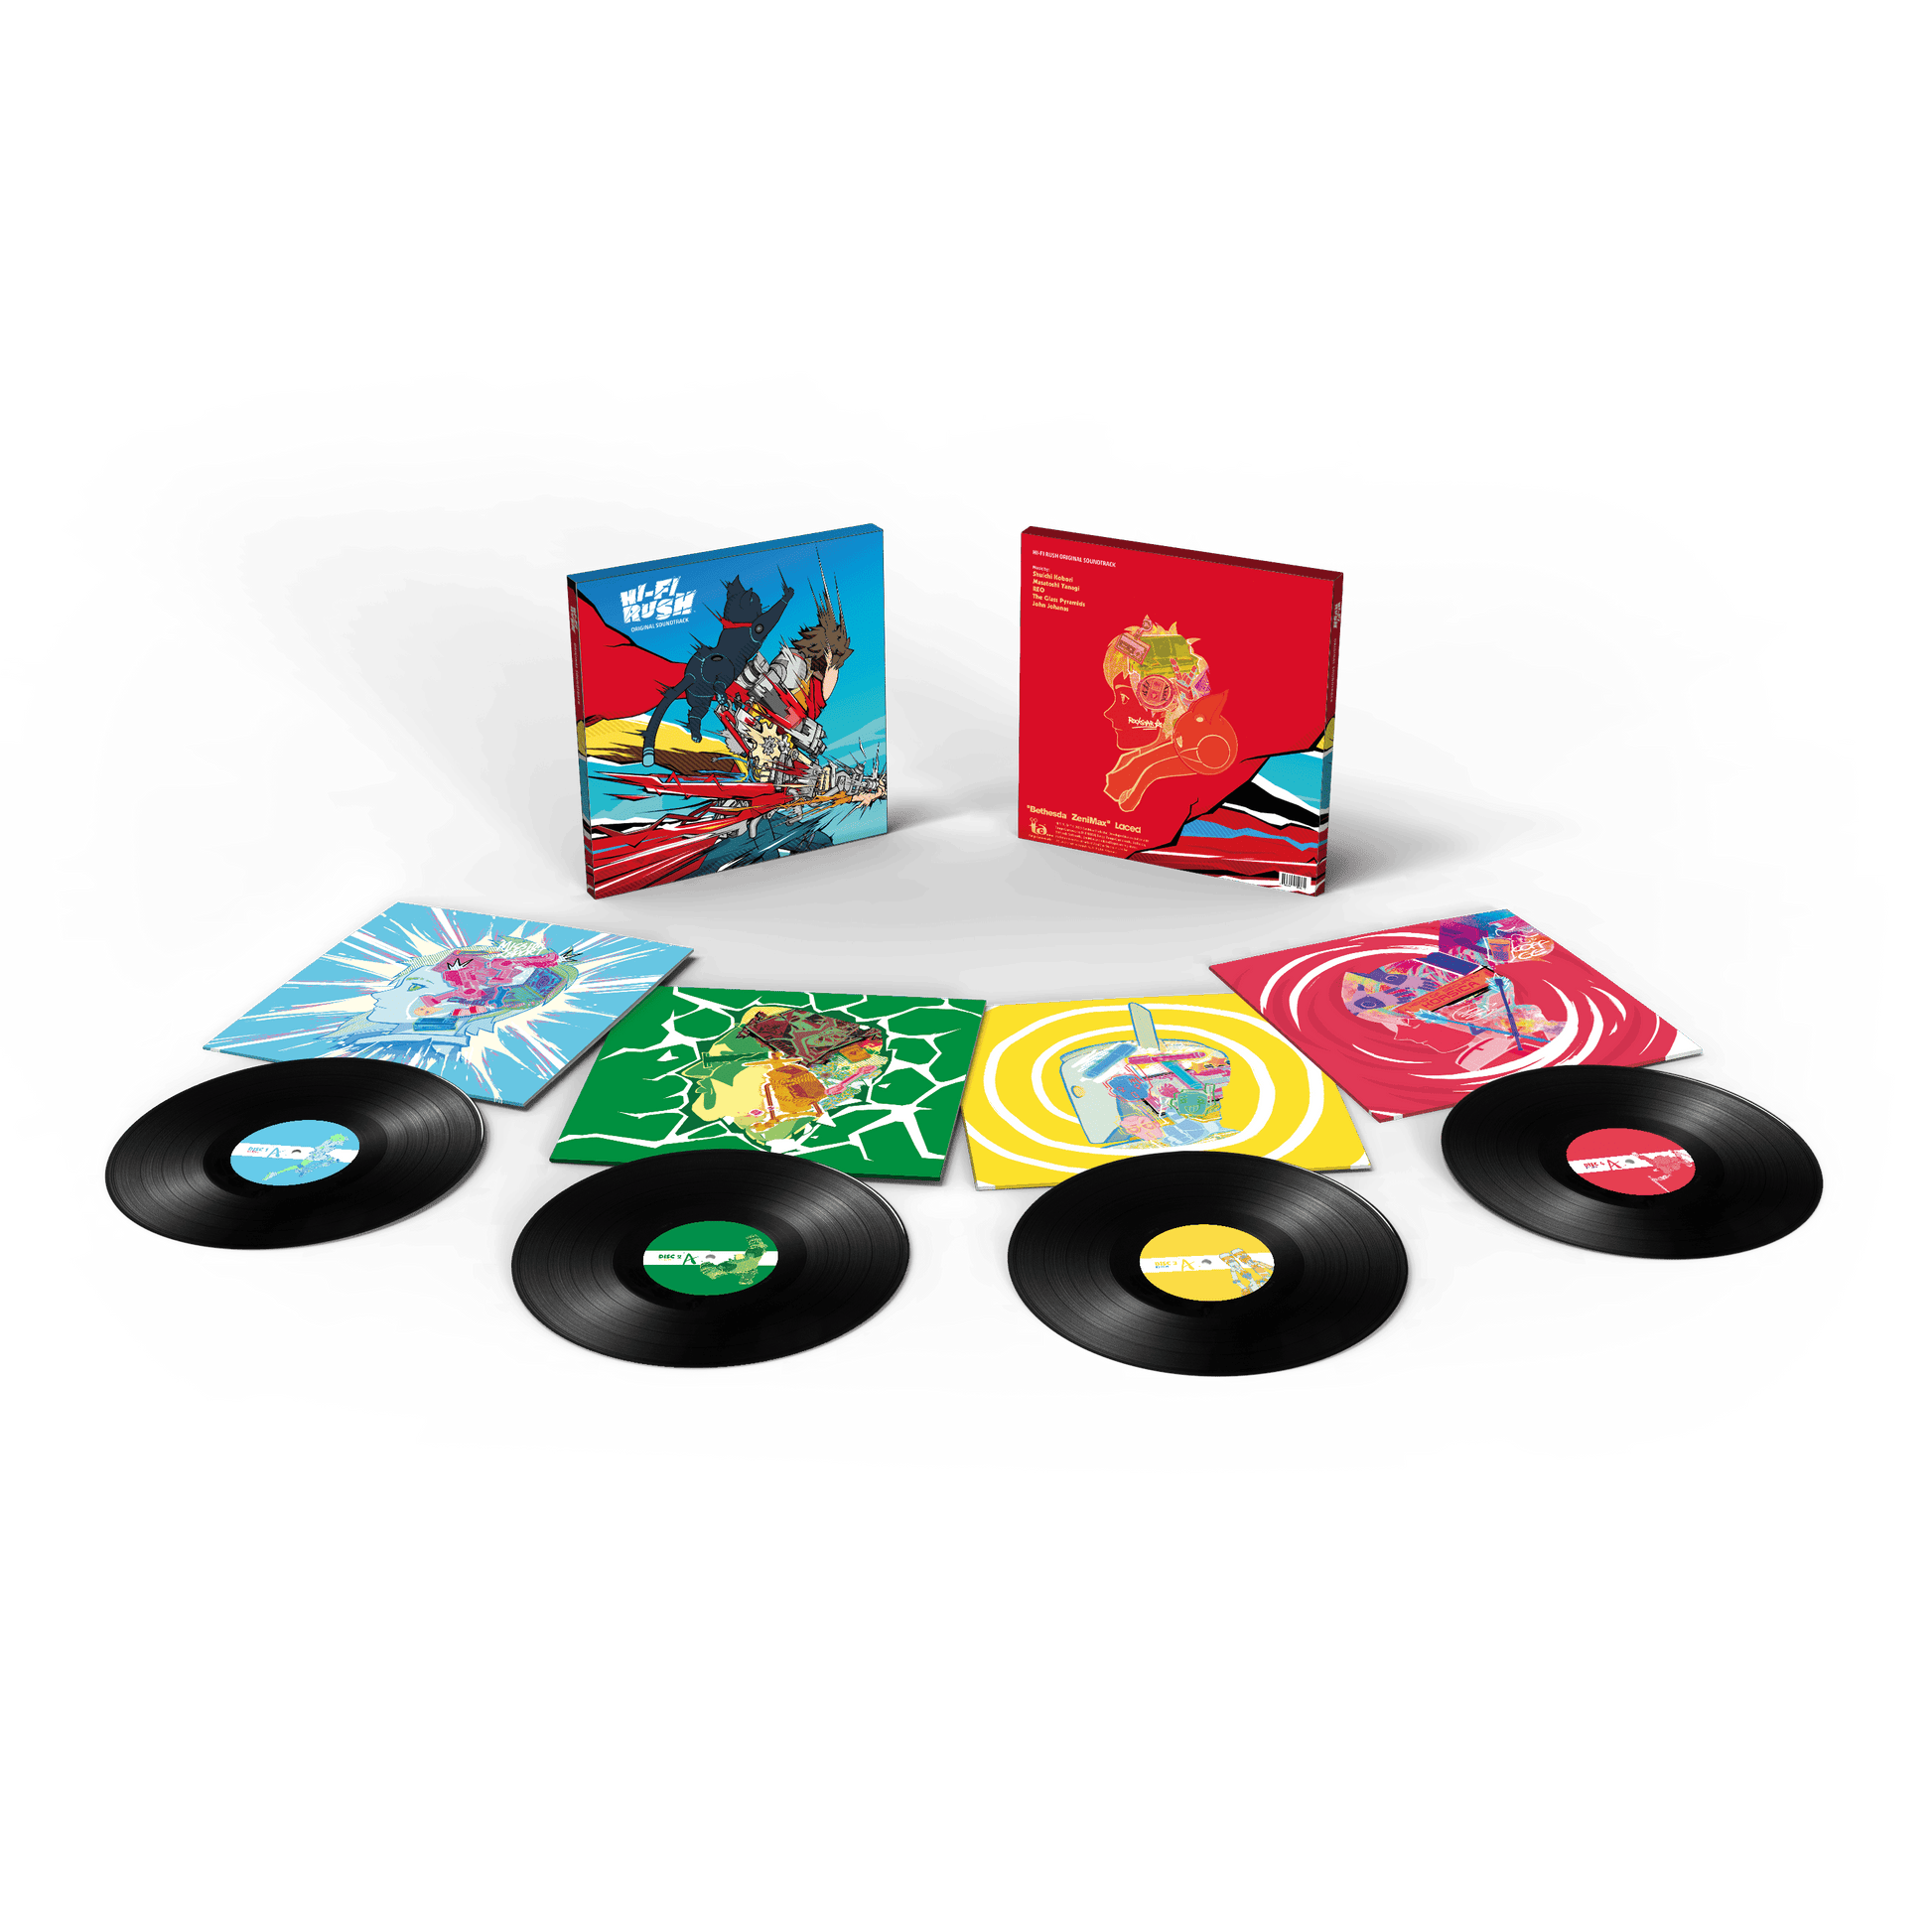 Studio Ghibli / Various 4LP Box Set (Vinyl)